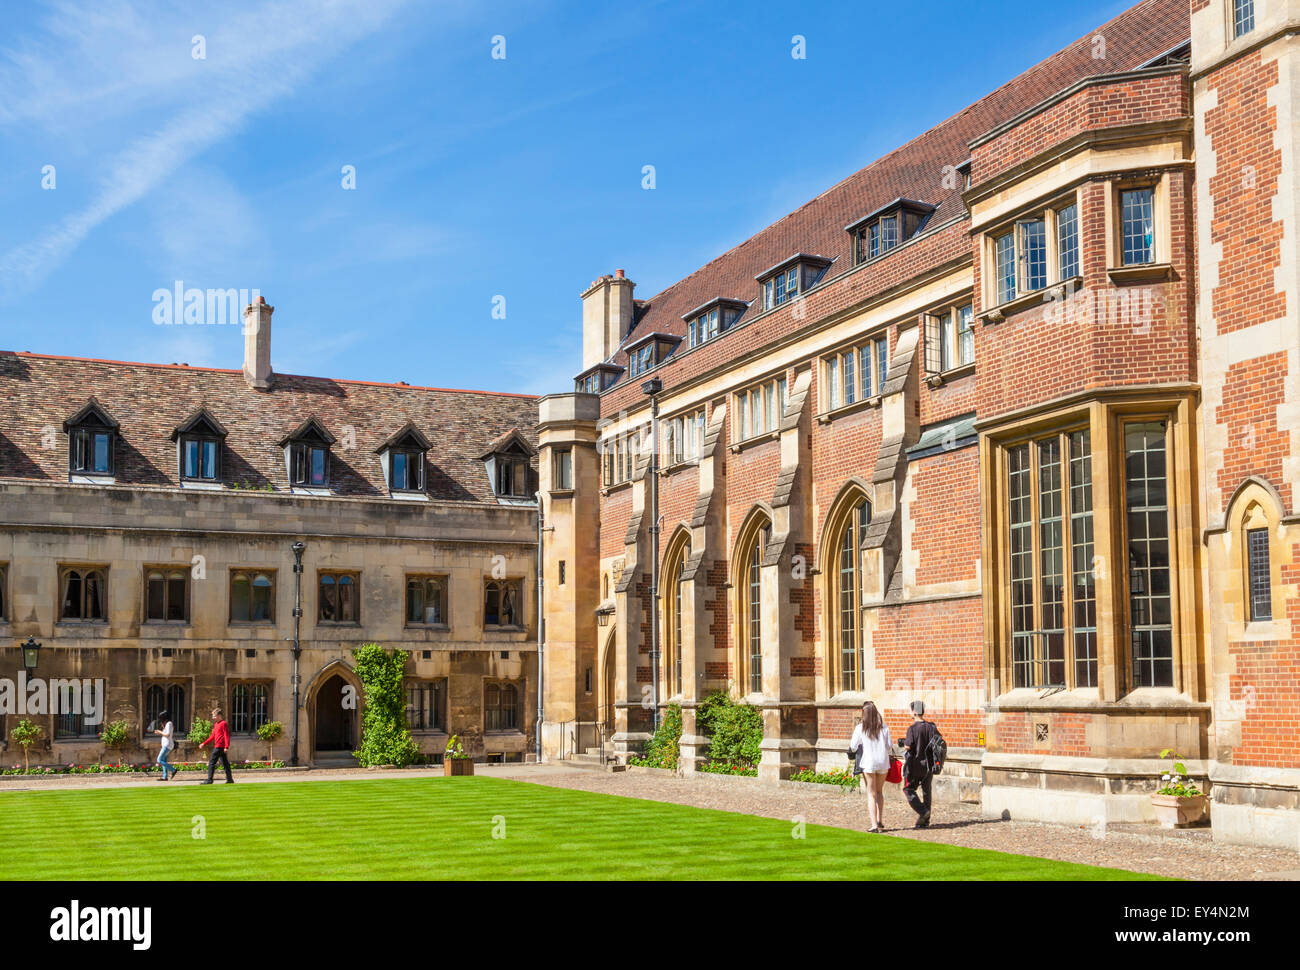 Students in Pembroke College Quad Cambridge University Cambridgeshire England UK GB EU Europe Stock Photo